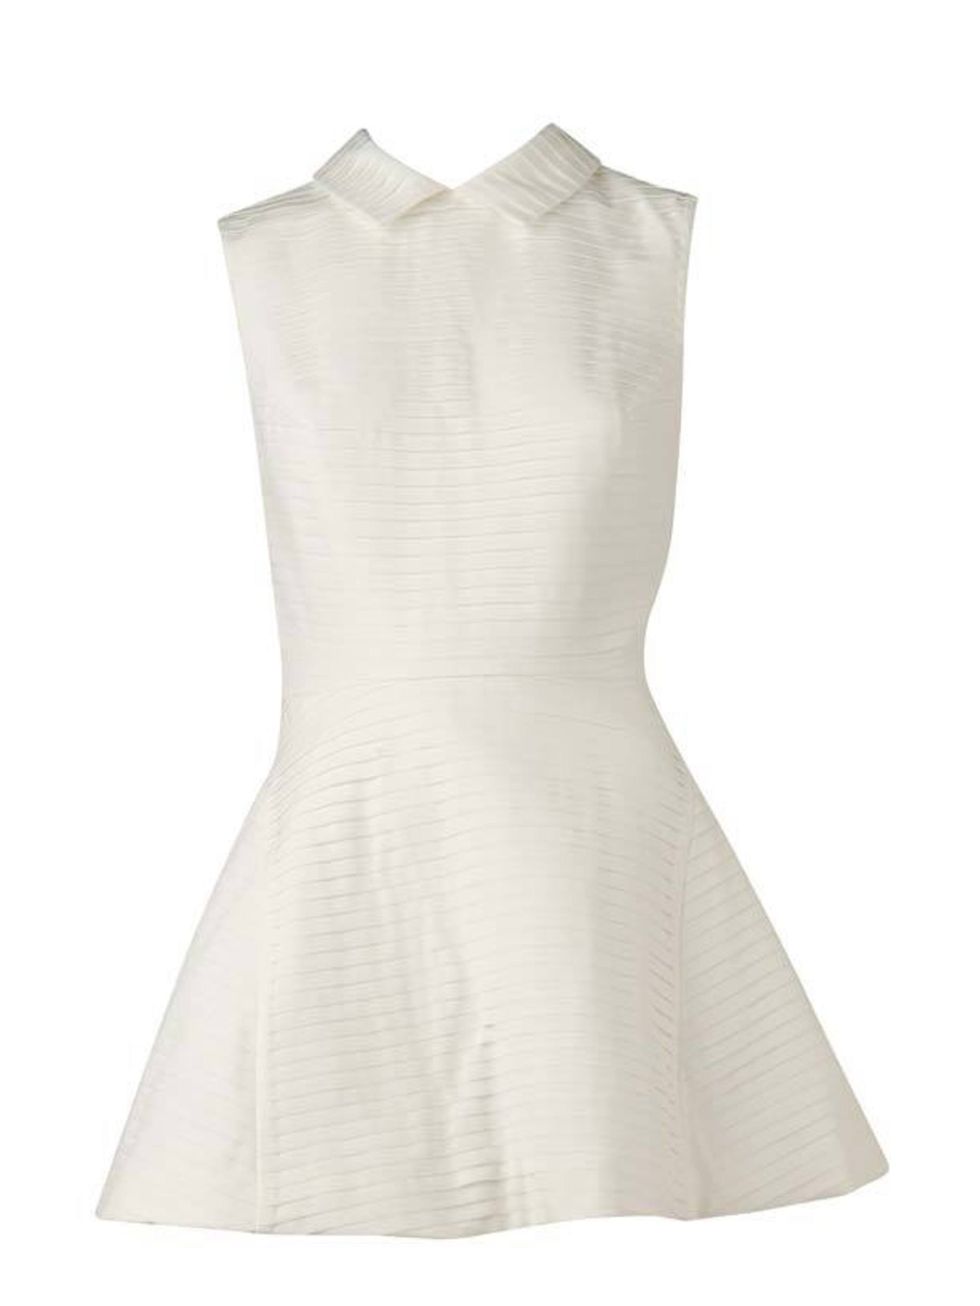 <p>Lilee white pleated dress, £340, at <a href="http://www.selfridges.com/en/Womenswear/Categories/ONLY-AT-SELFRIDGES/Pleated-dress_236-3002097-L11SSOP04S/">Selfridges</a> </p>